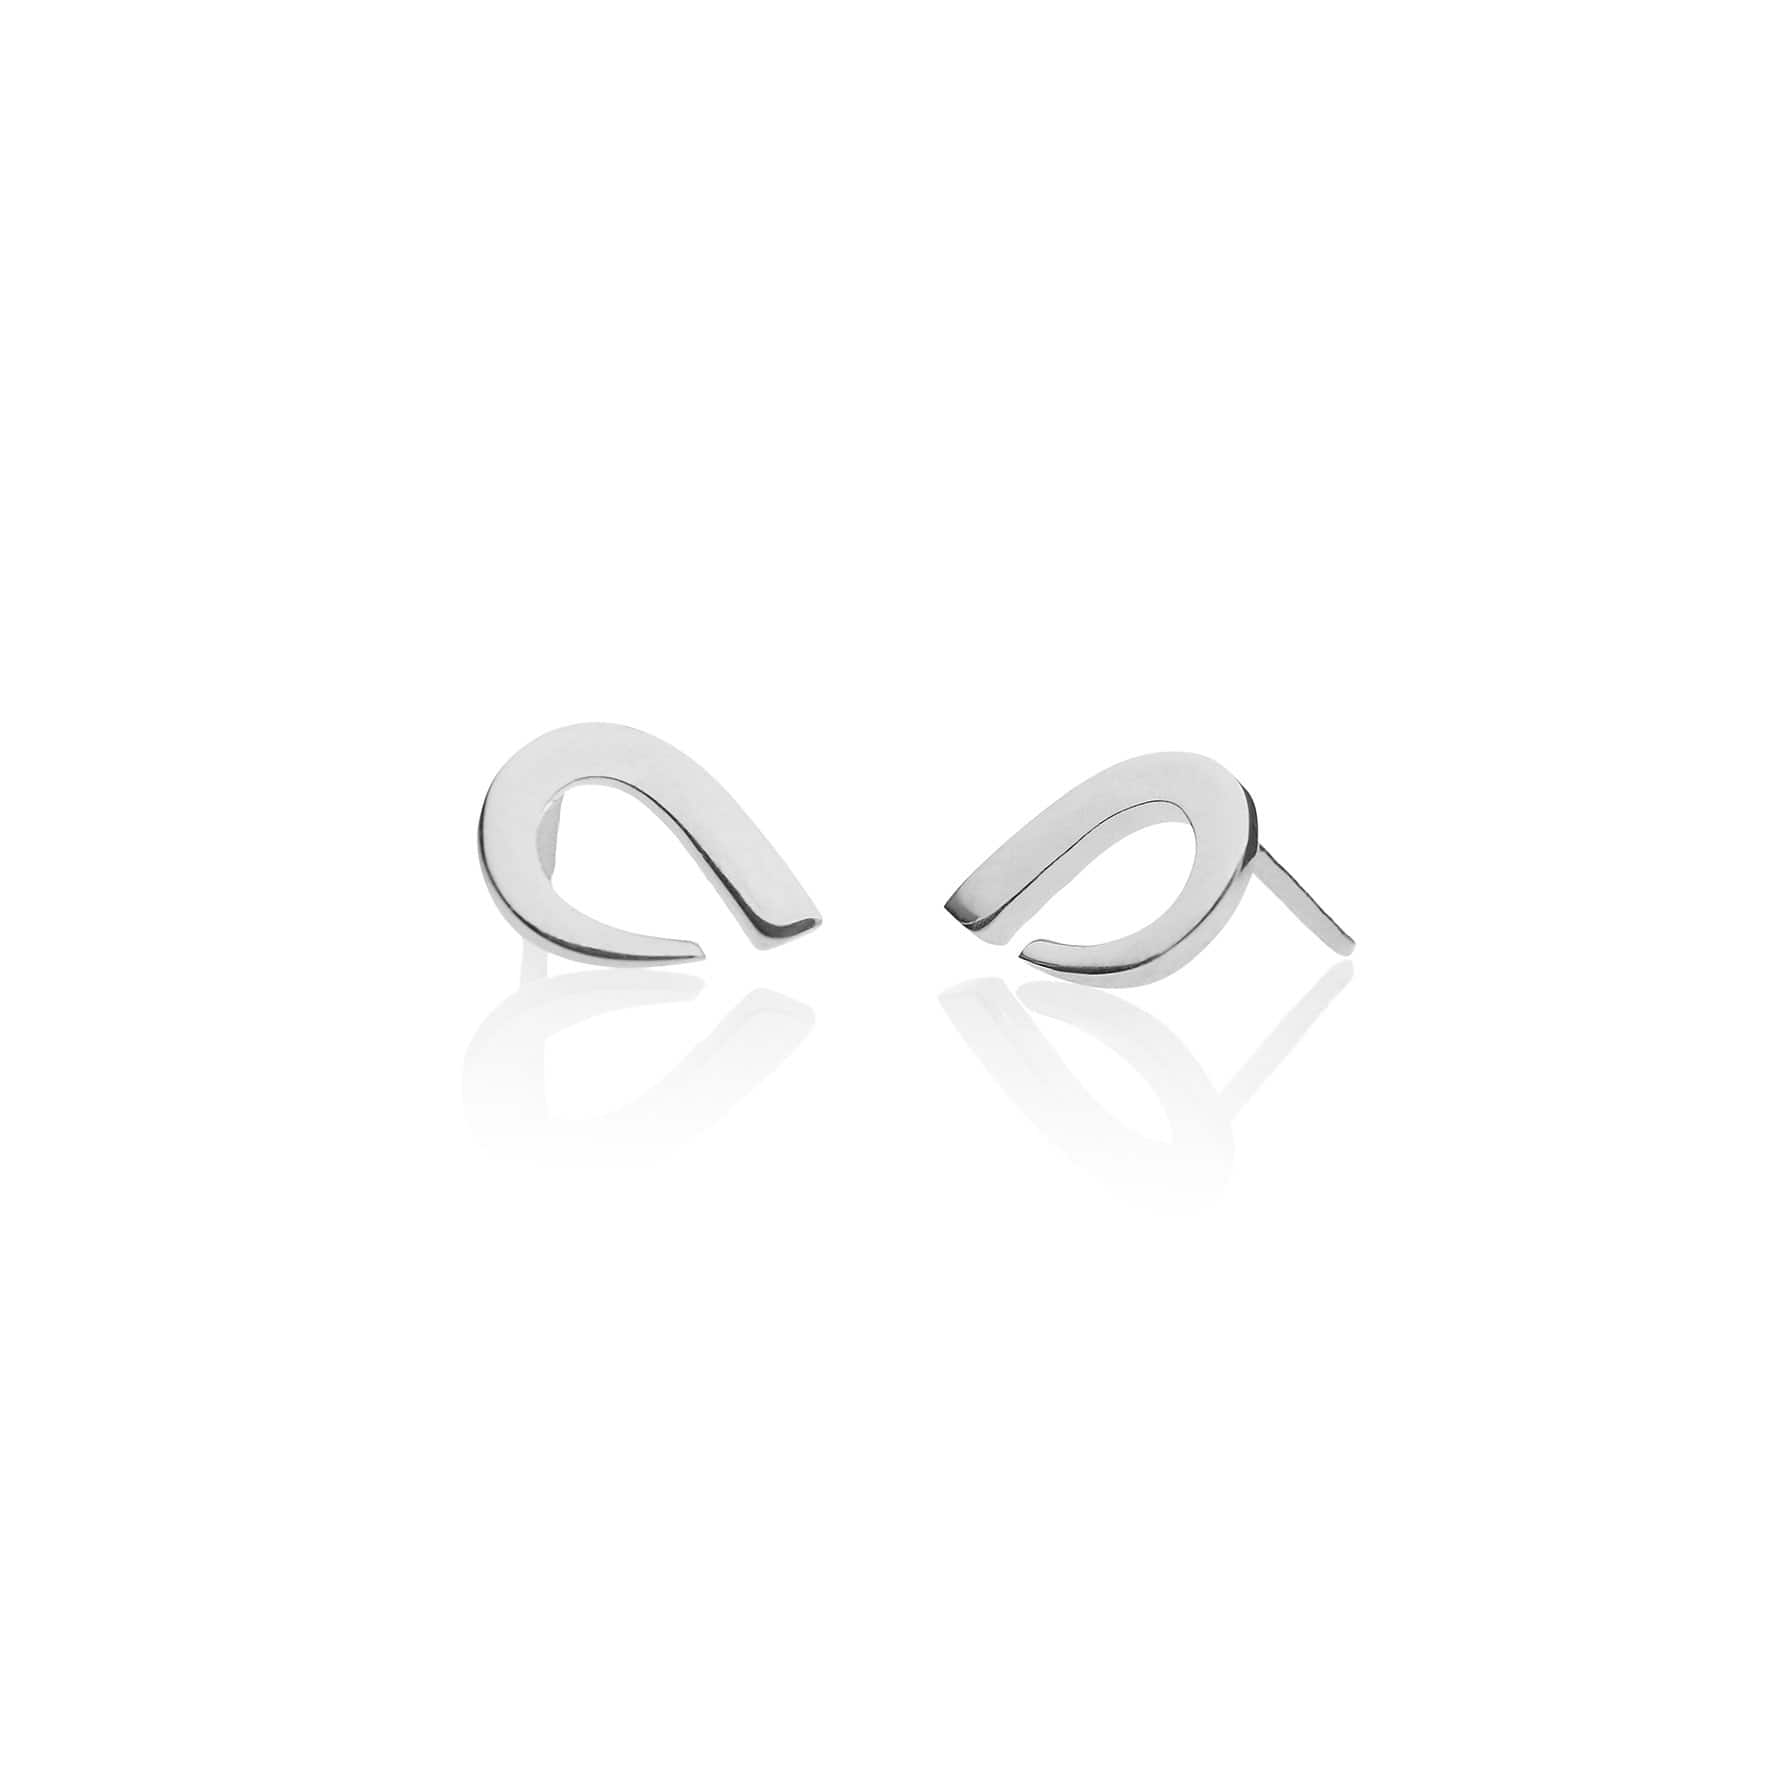 Silver earrings in a cute and Scandinavian design